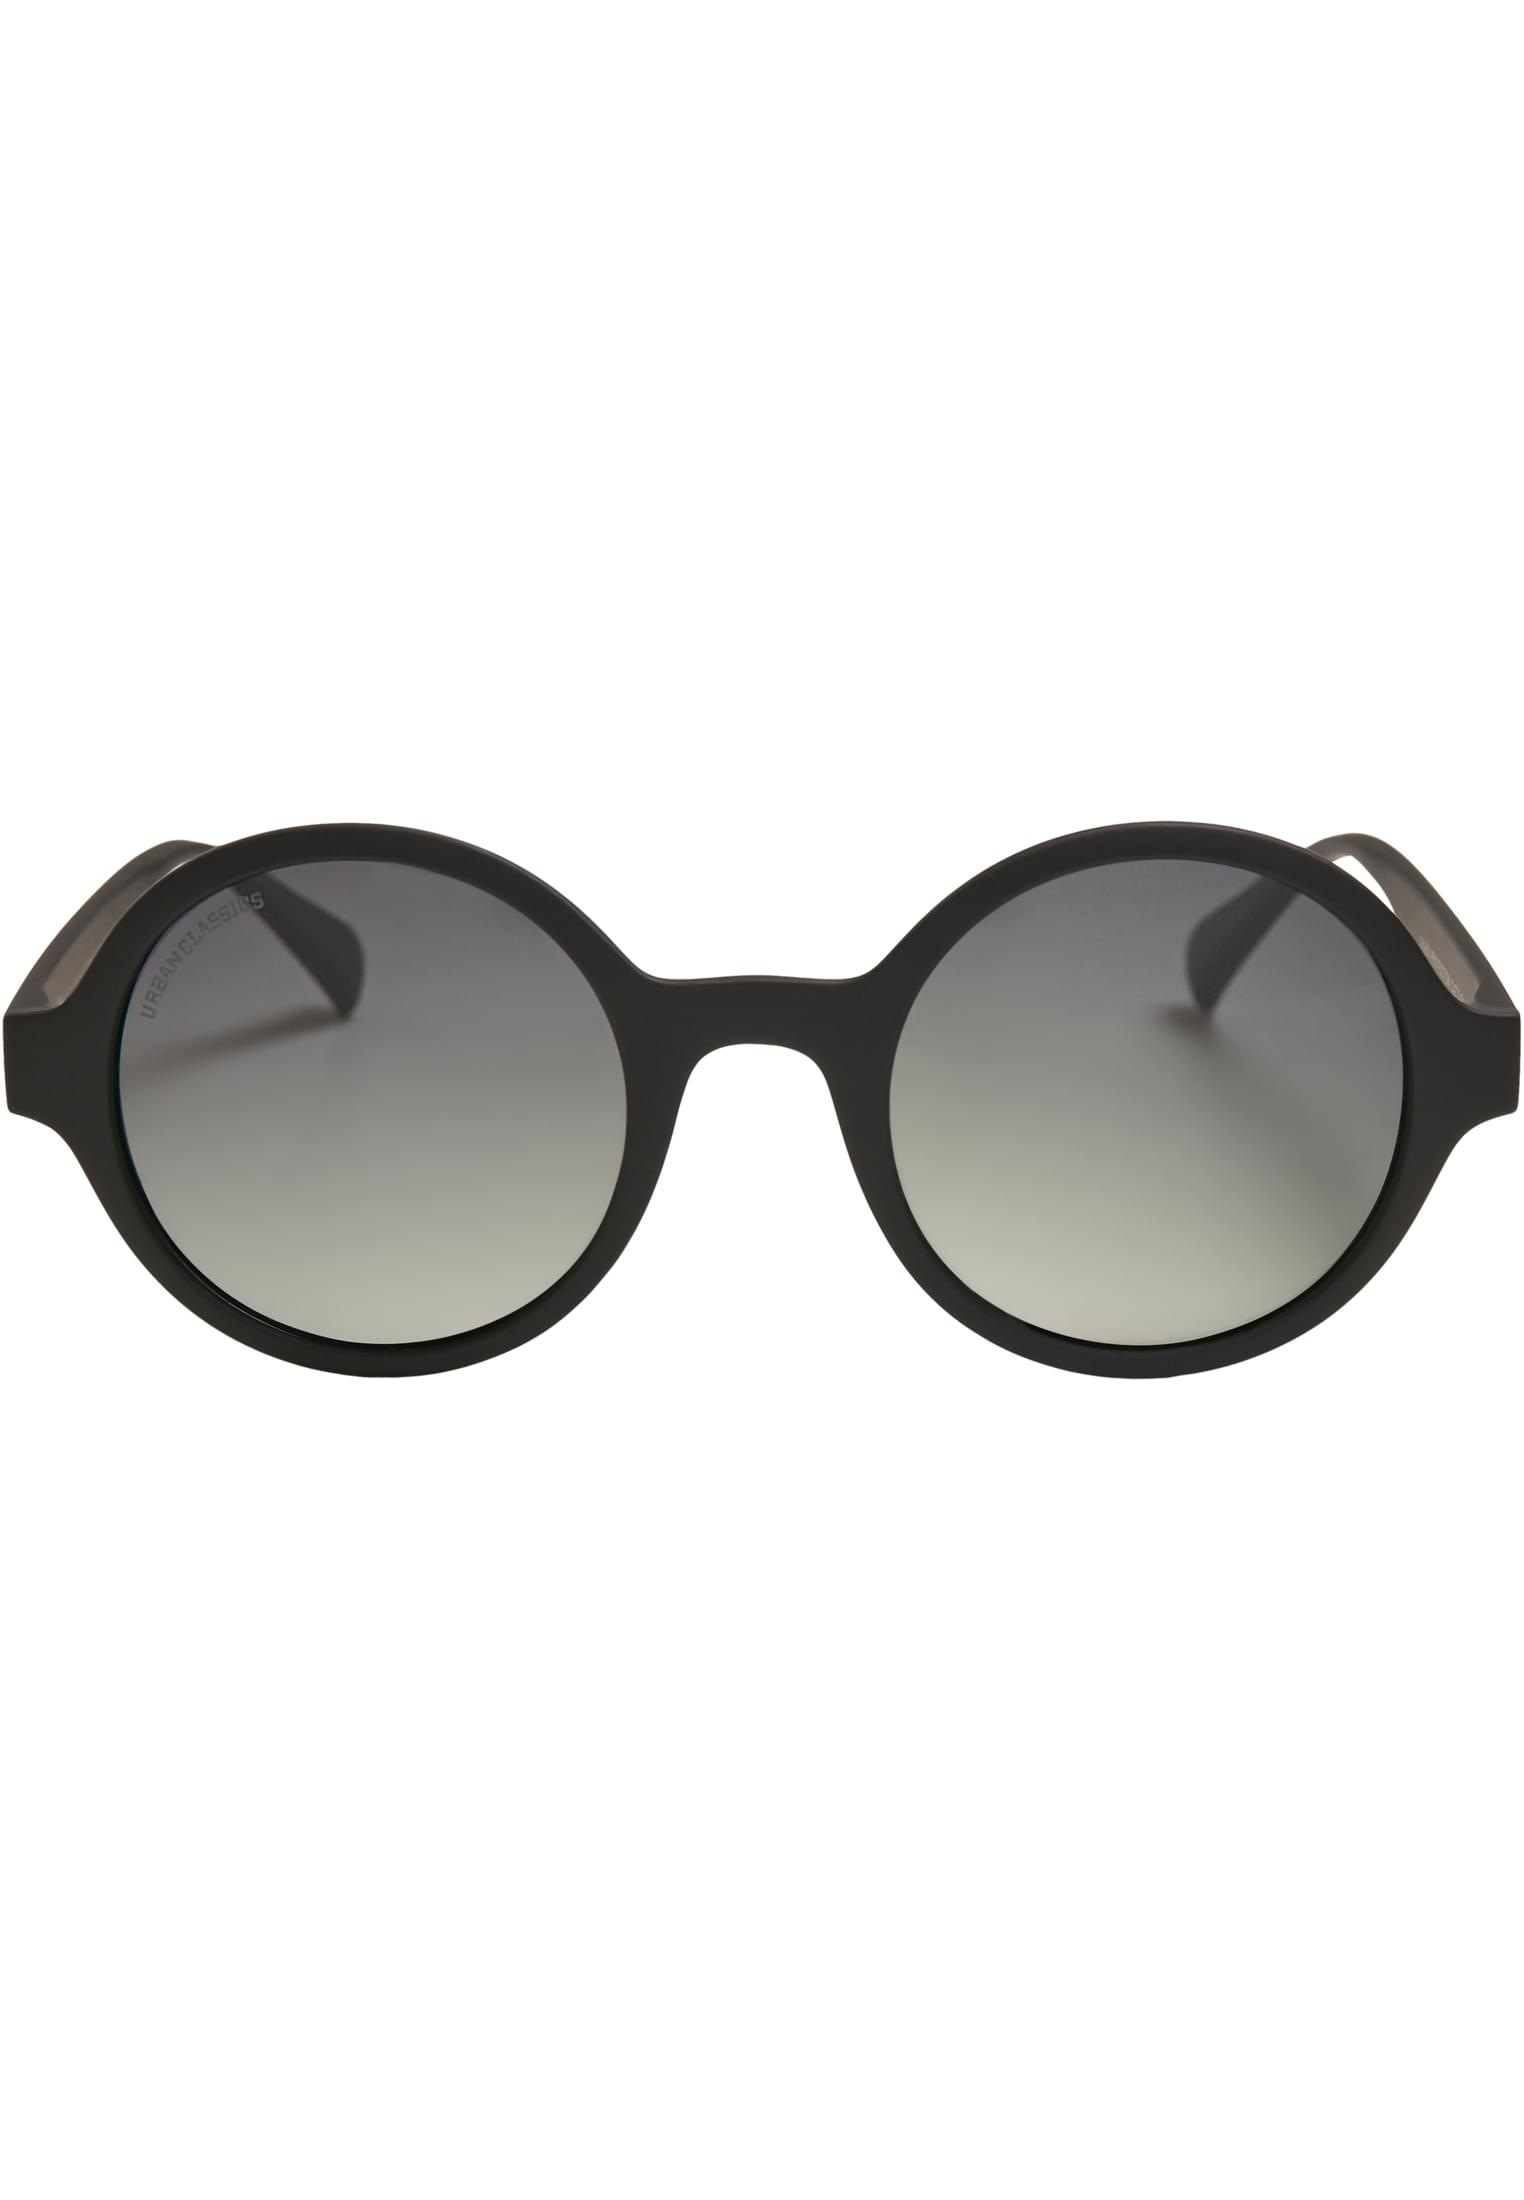 Sonnenbrille Funk walking | »Accessoires Sunglasses bestellen URBAN Retro I\'m UC« CLASSICS